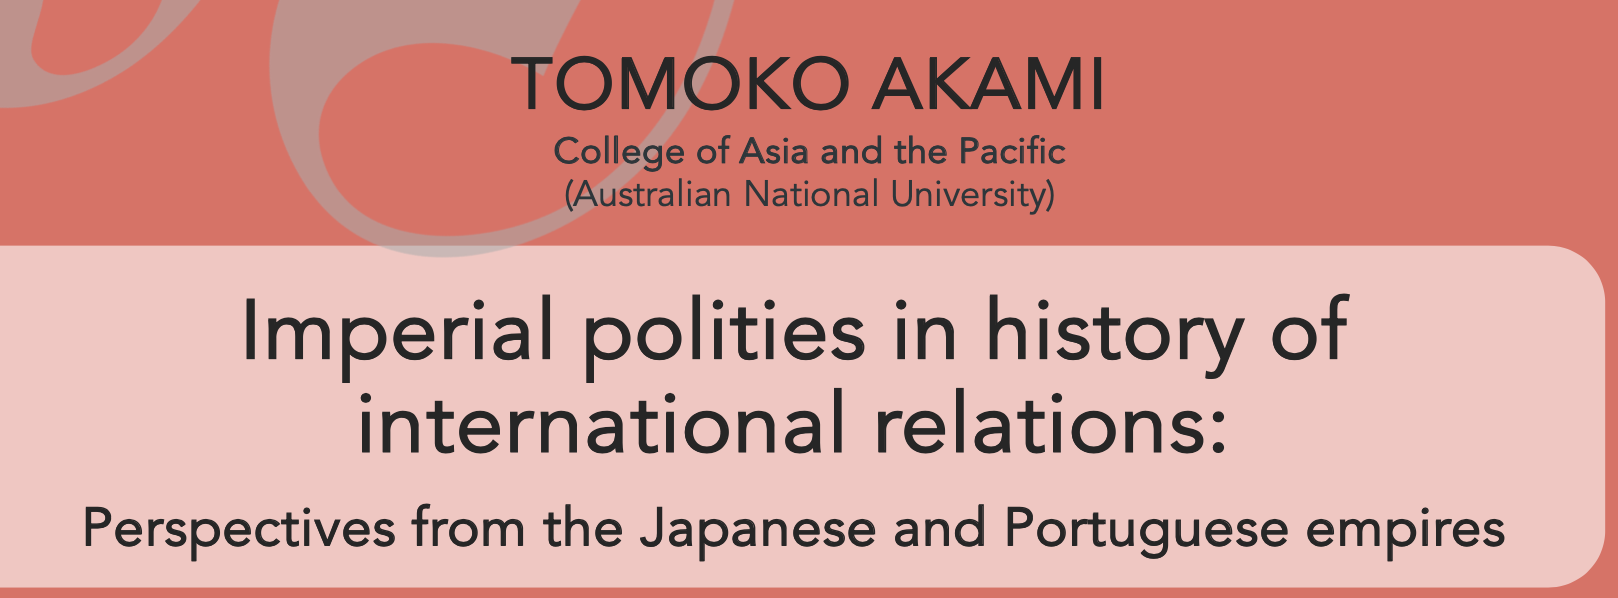 Conferência por Tomoko Akami